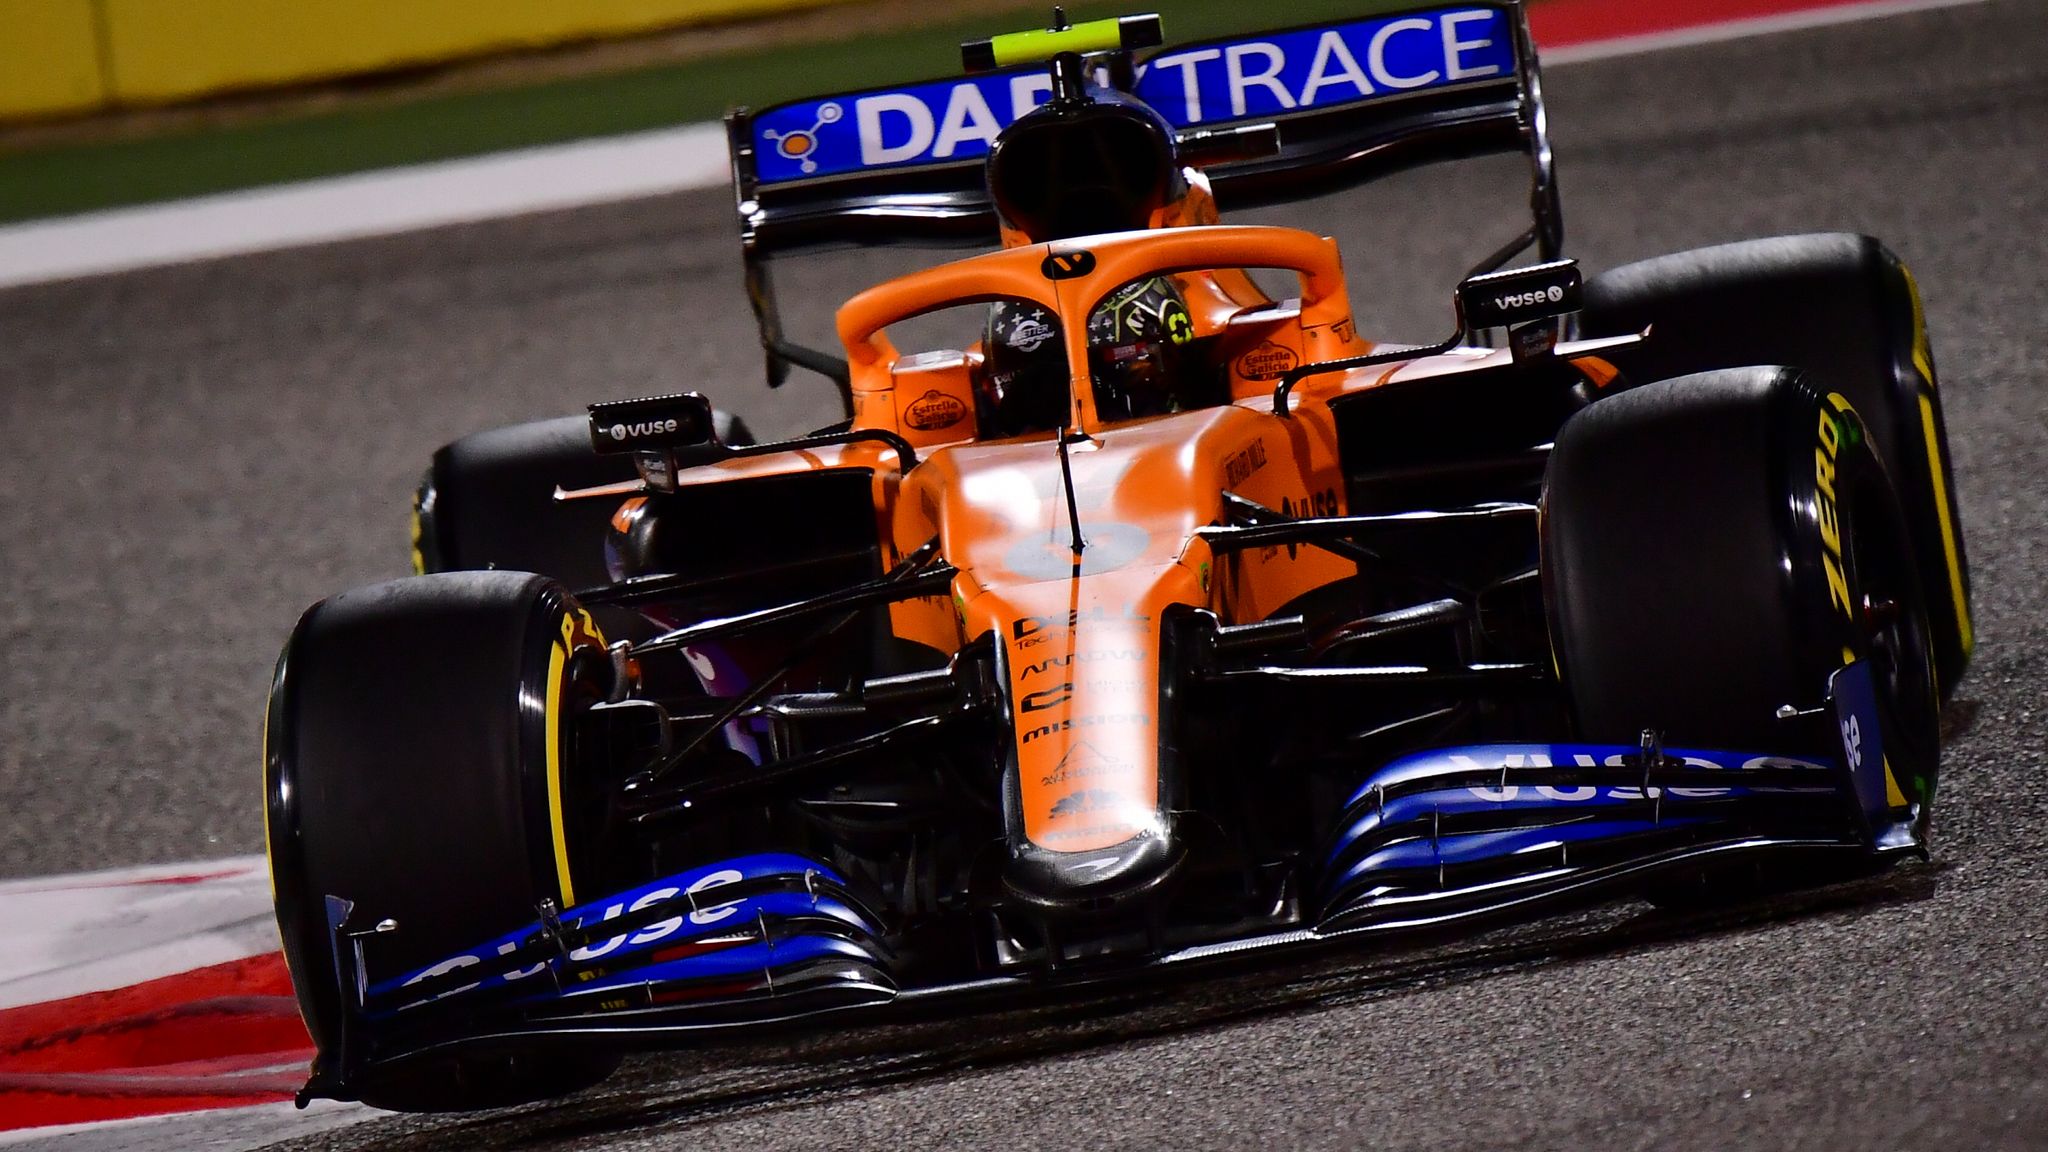 ink battle access McLaren set 2021 car February launch date for Mercedes-powered MCL35M and  Daniel Ricciardo reveal | F1 News